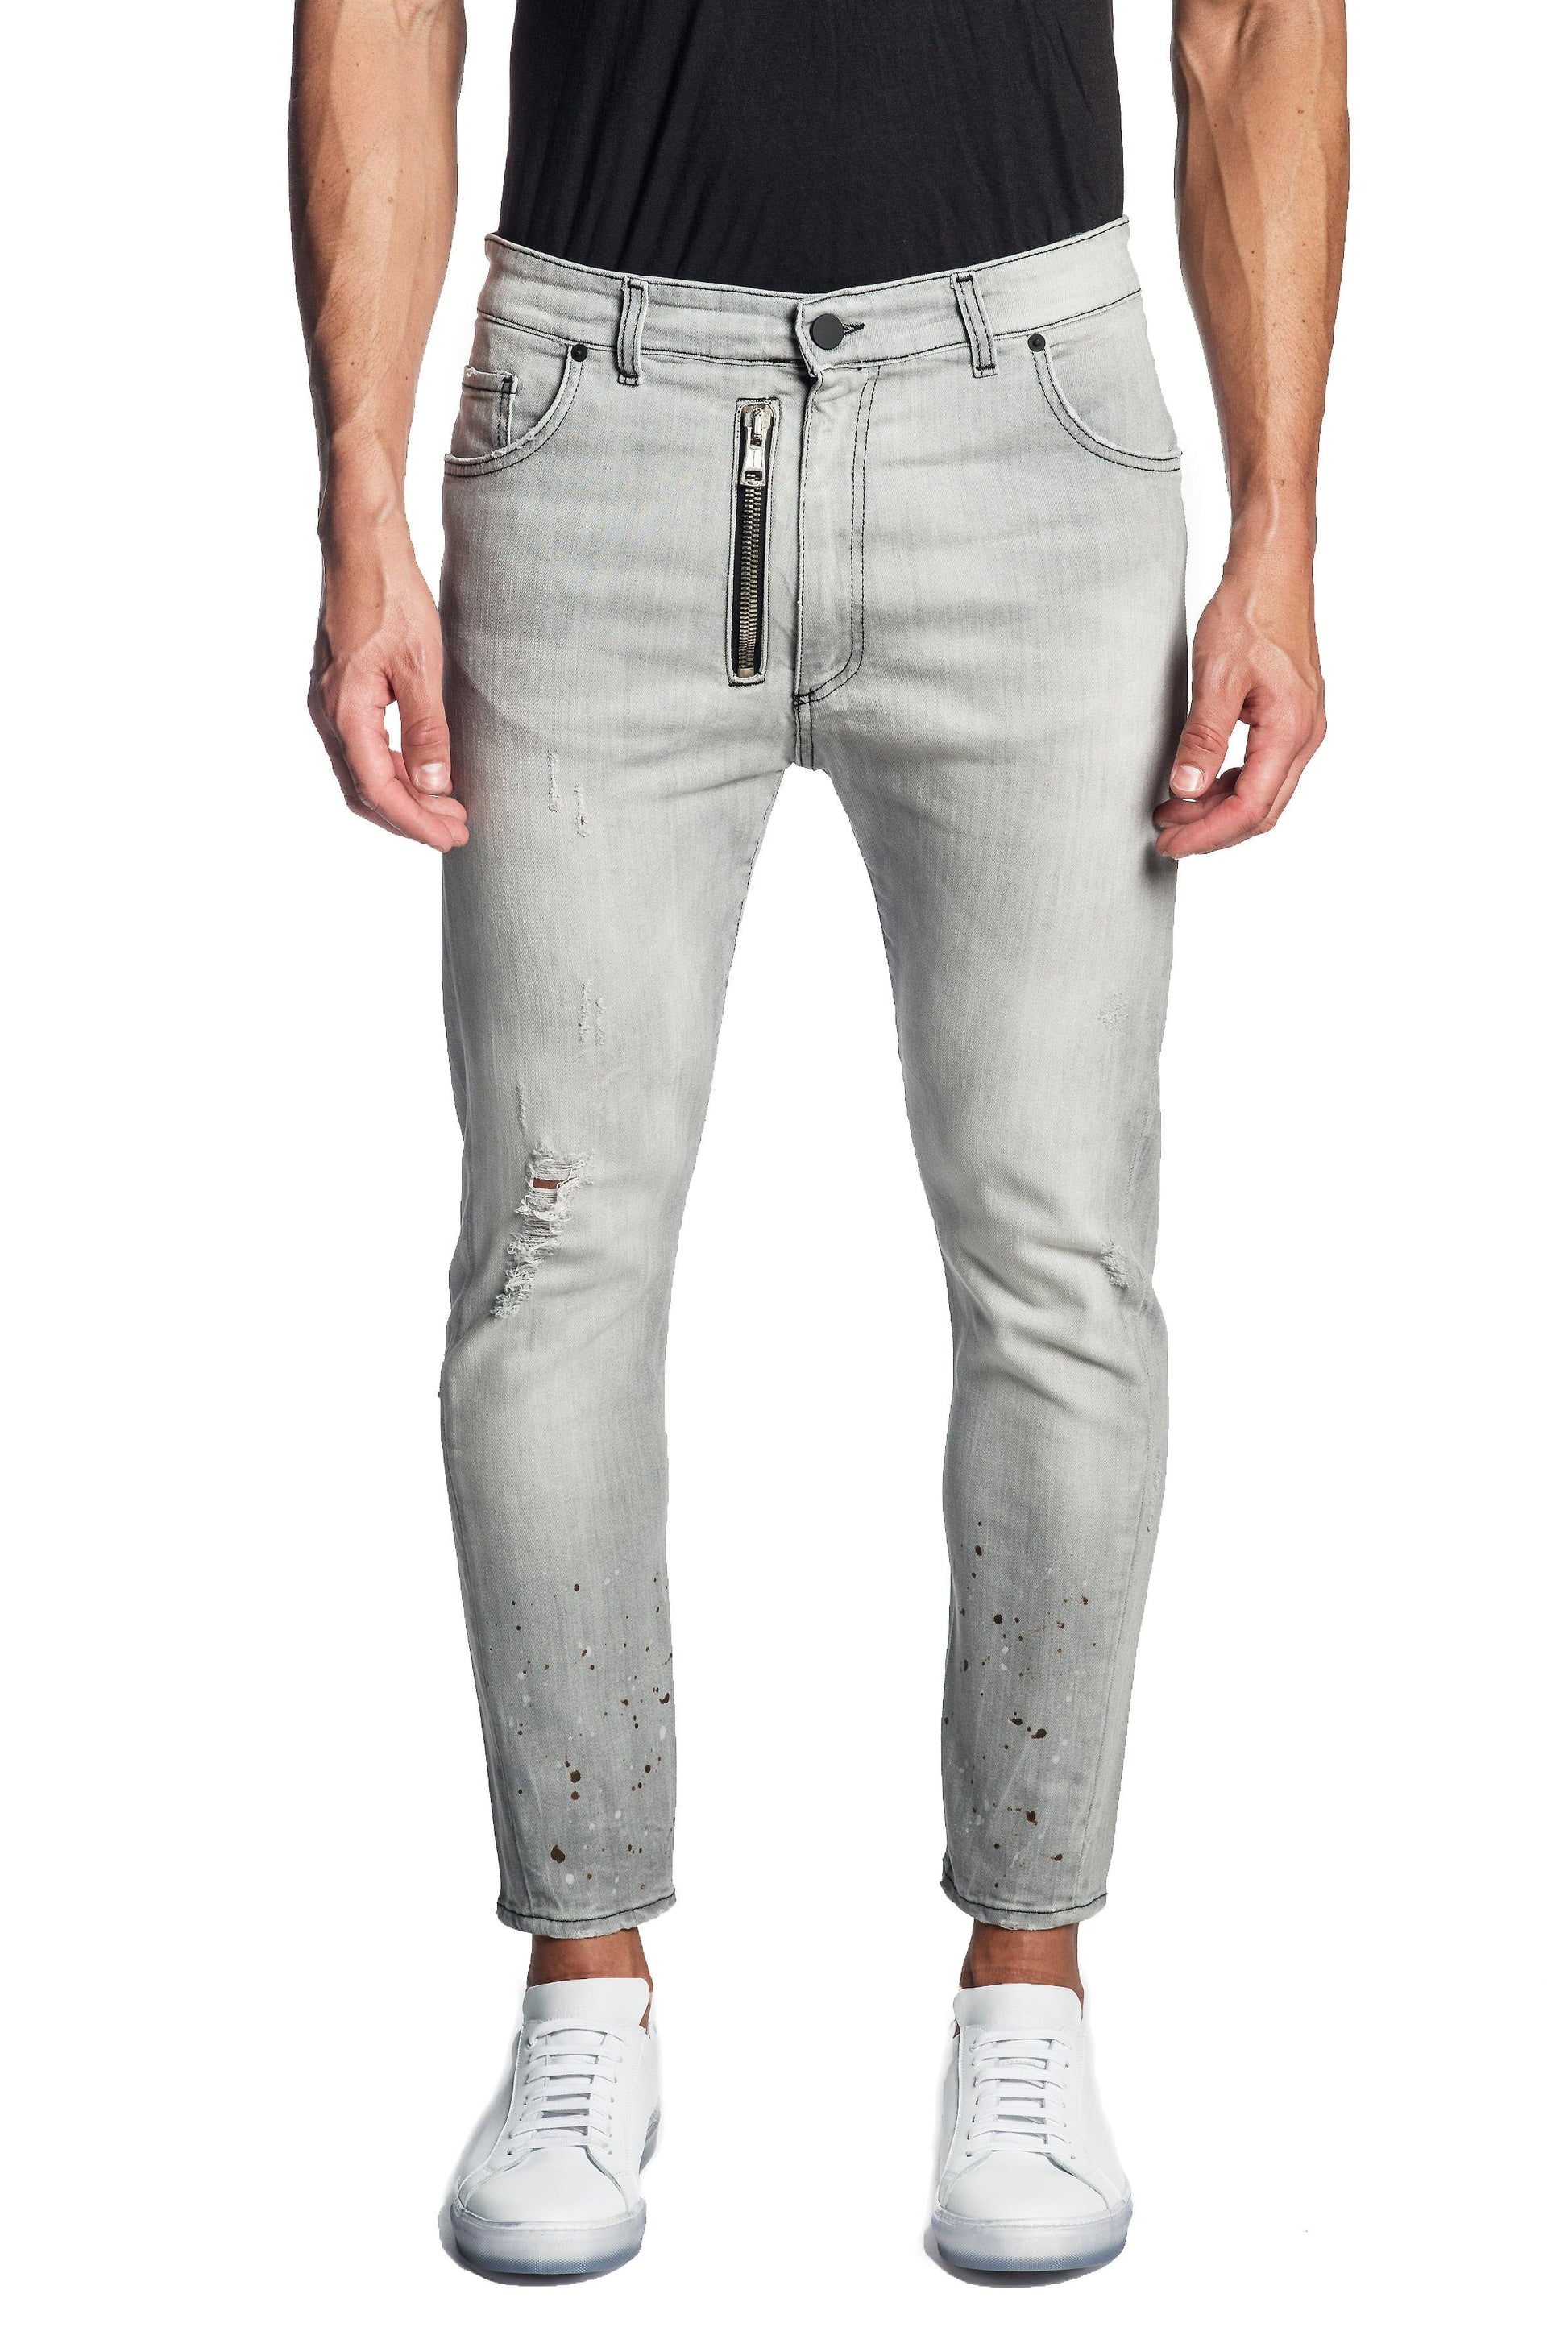 Grey Skinny Ripped Denim Jeans for Men JN-811.